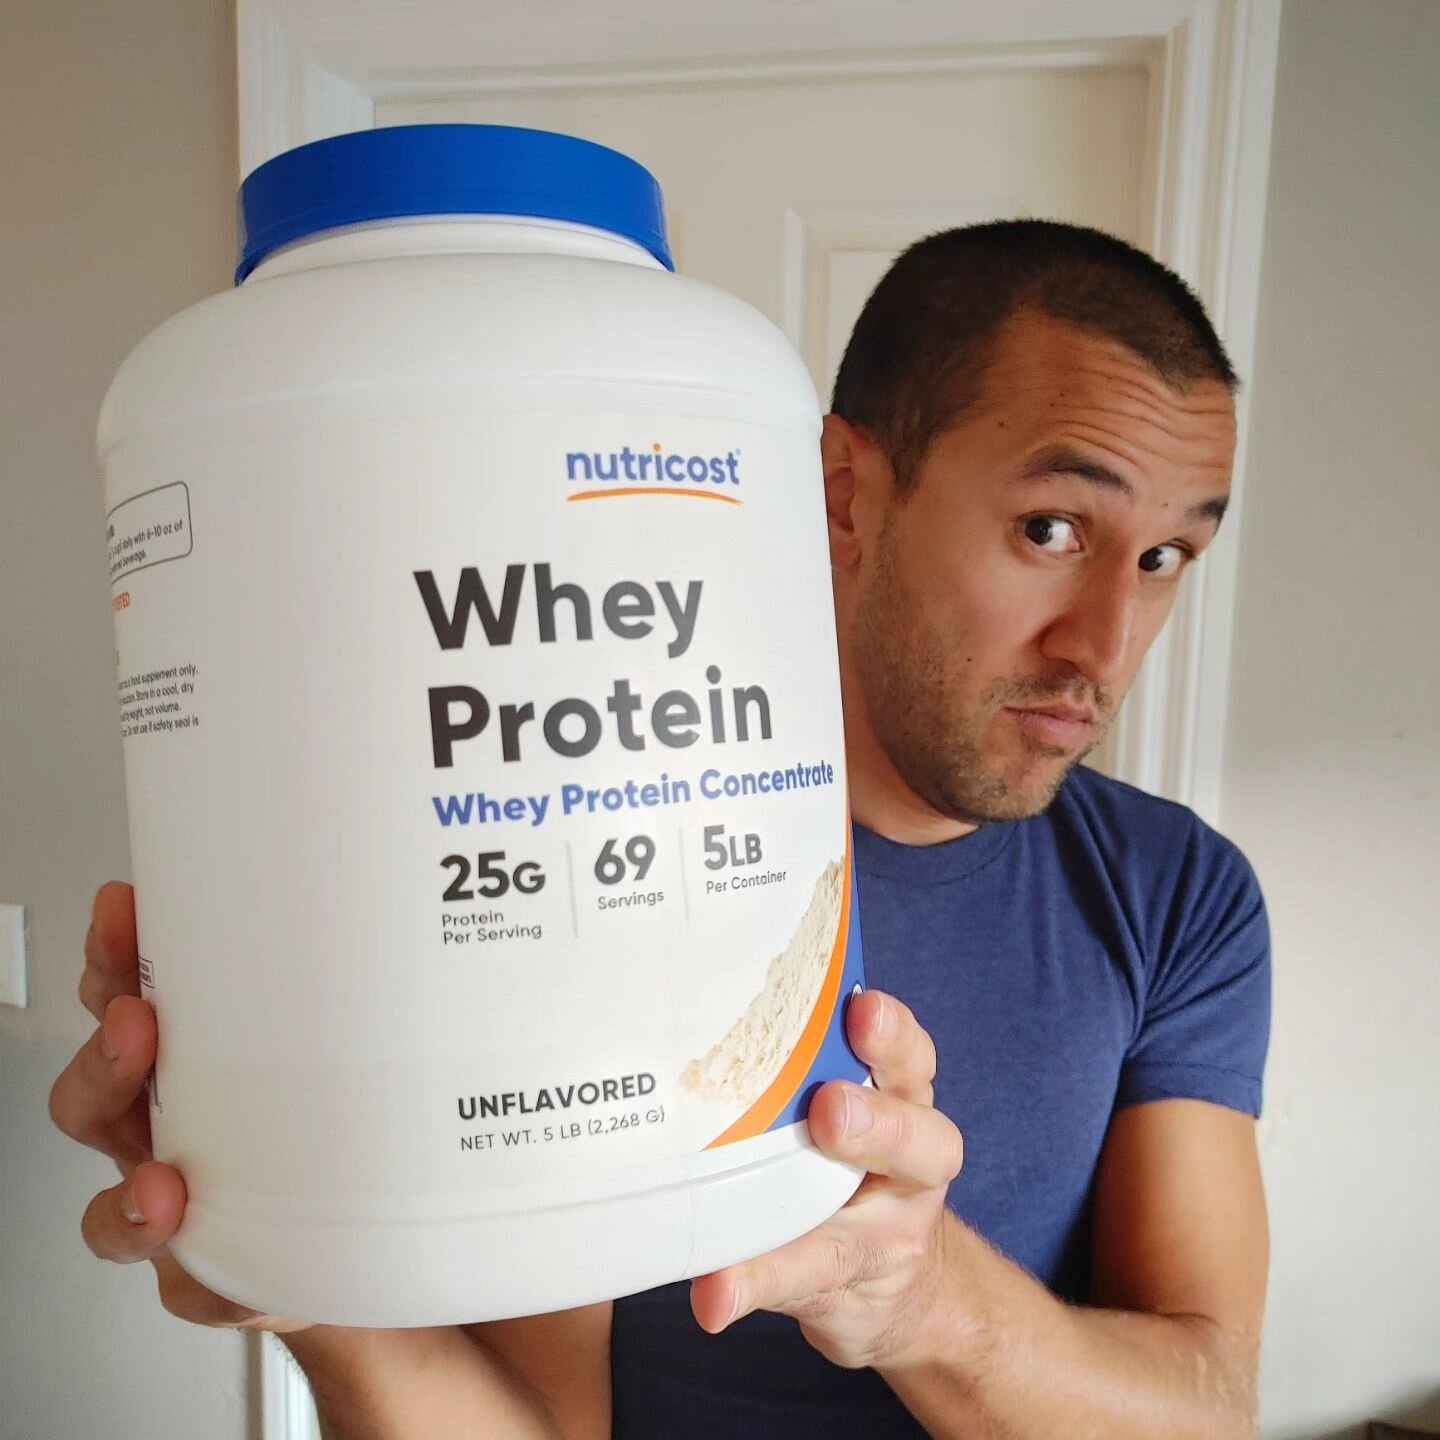 This is the biggest protein container ever.

#gobigorgohome
#semperporro
#alwaysforward